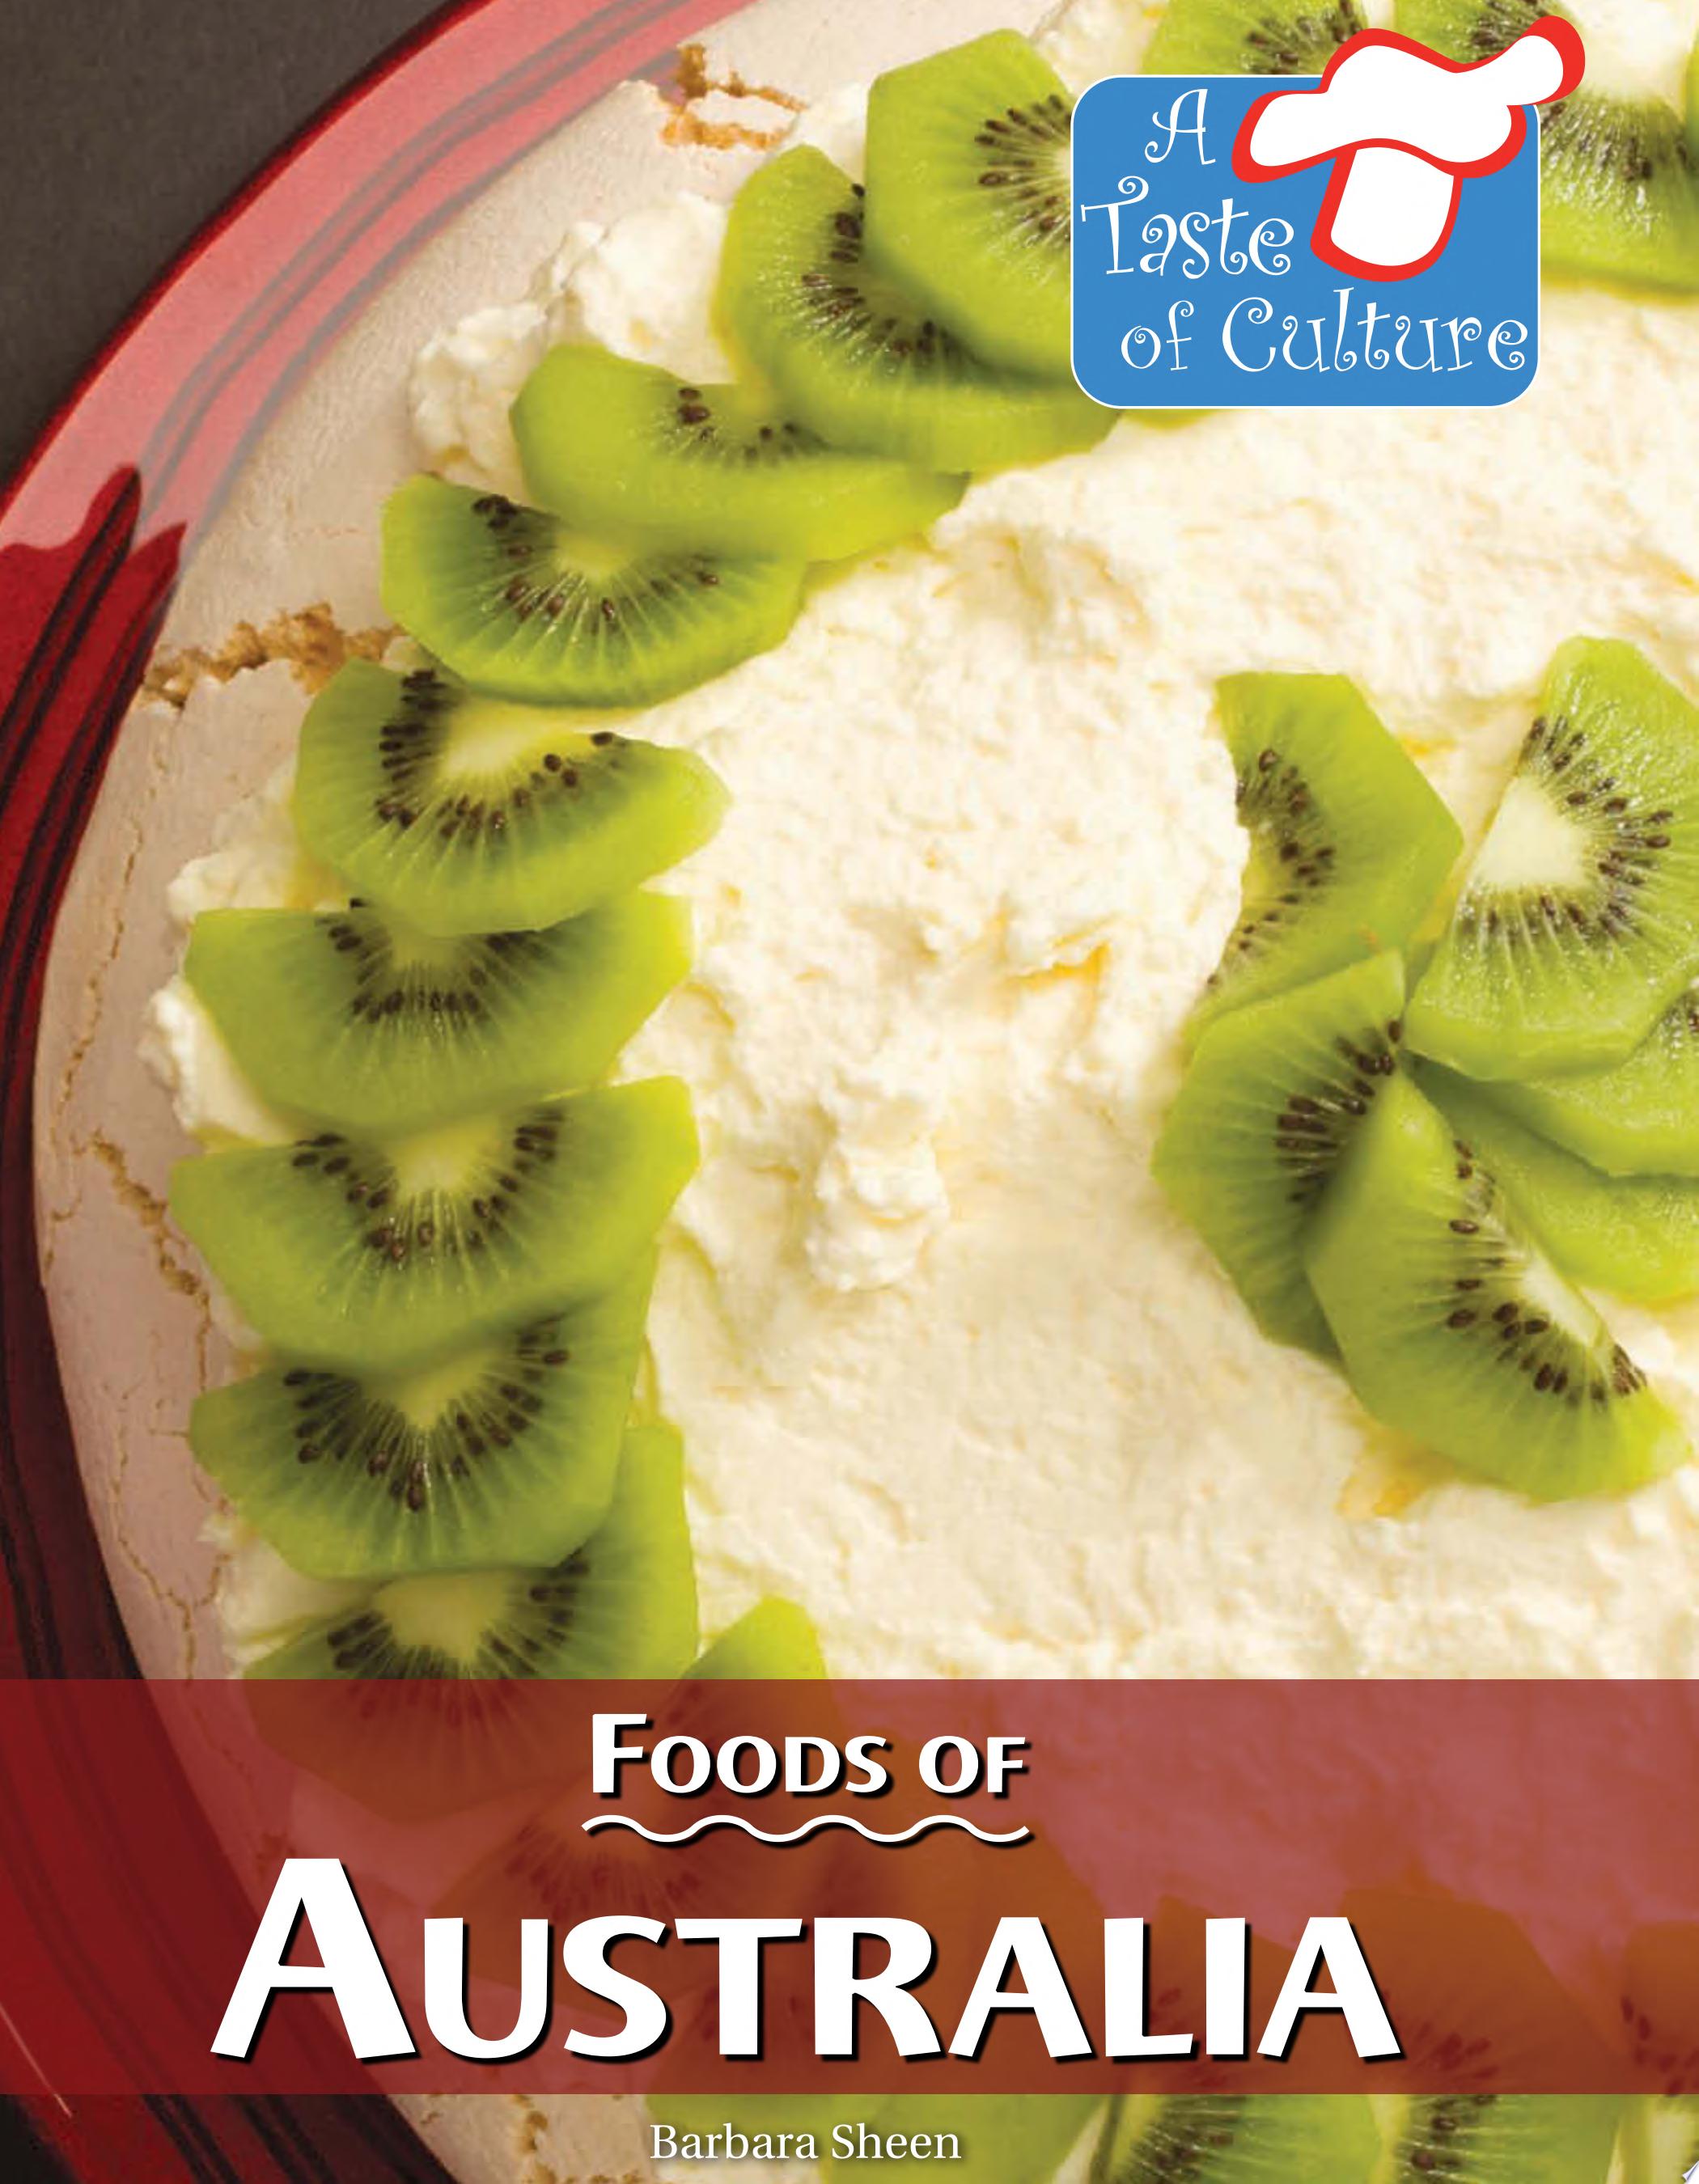 Image for "Foods of Australia"